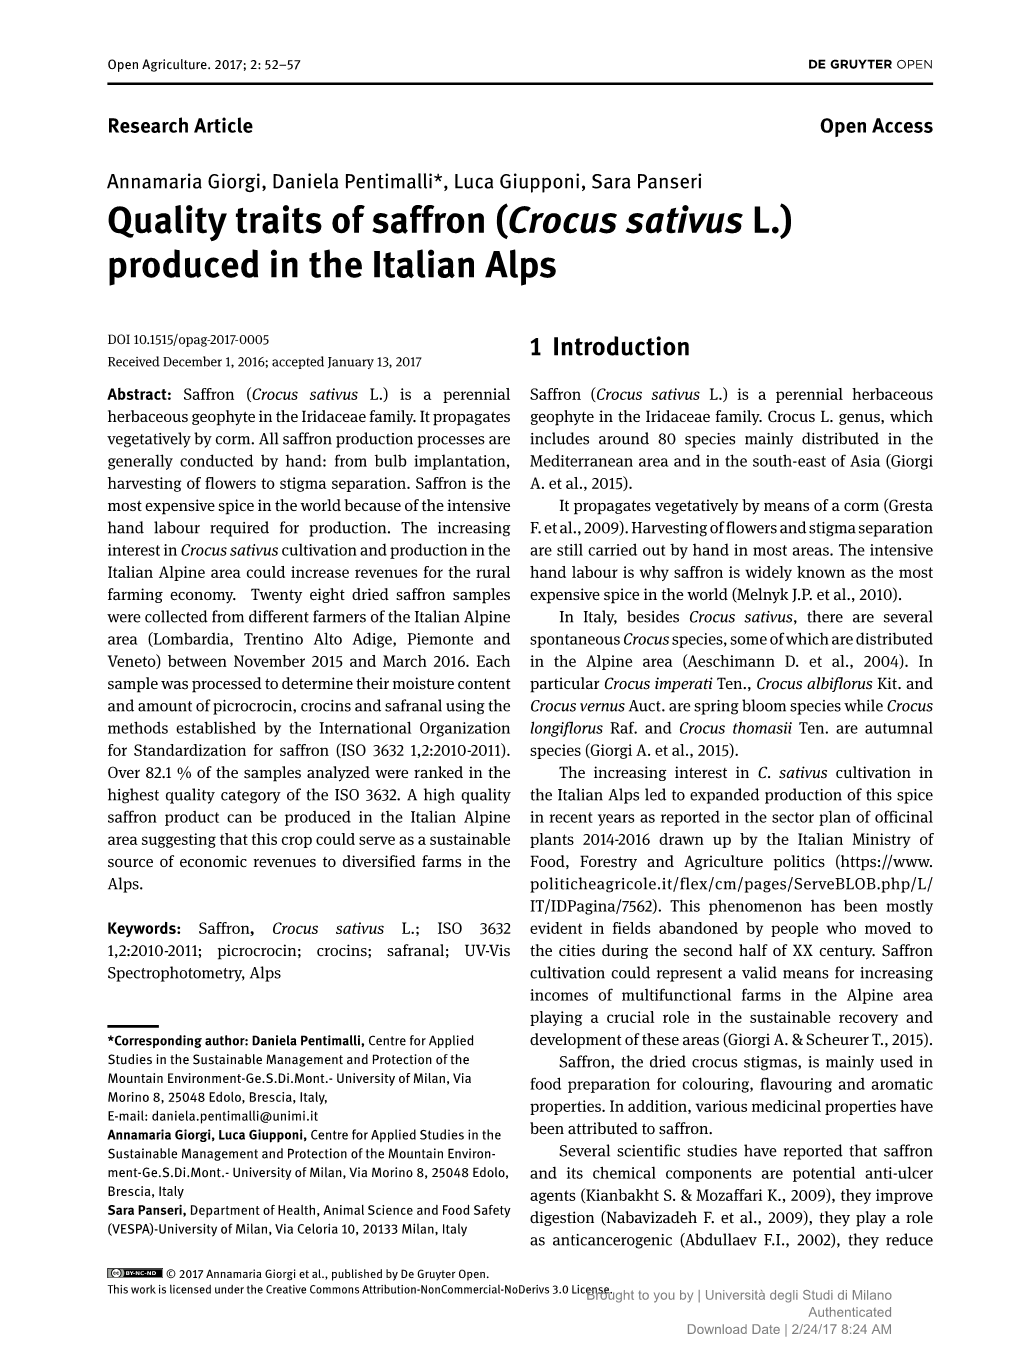 Quality Traits of Saffron (Crocus Sativus L.) Produced in the Italian Alps